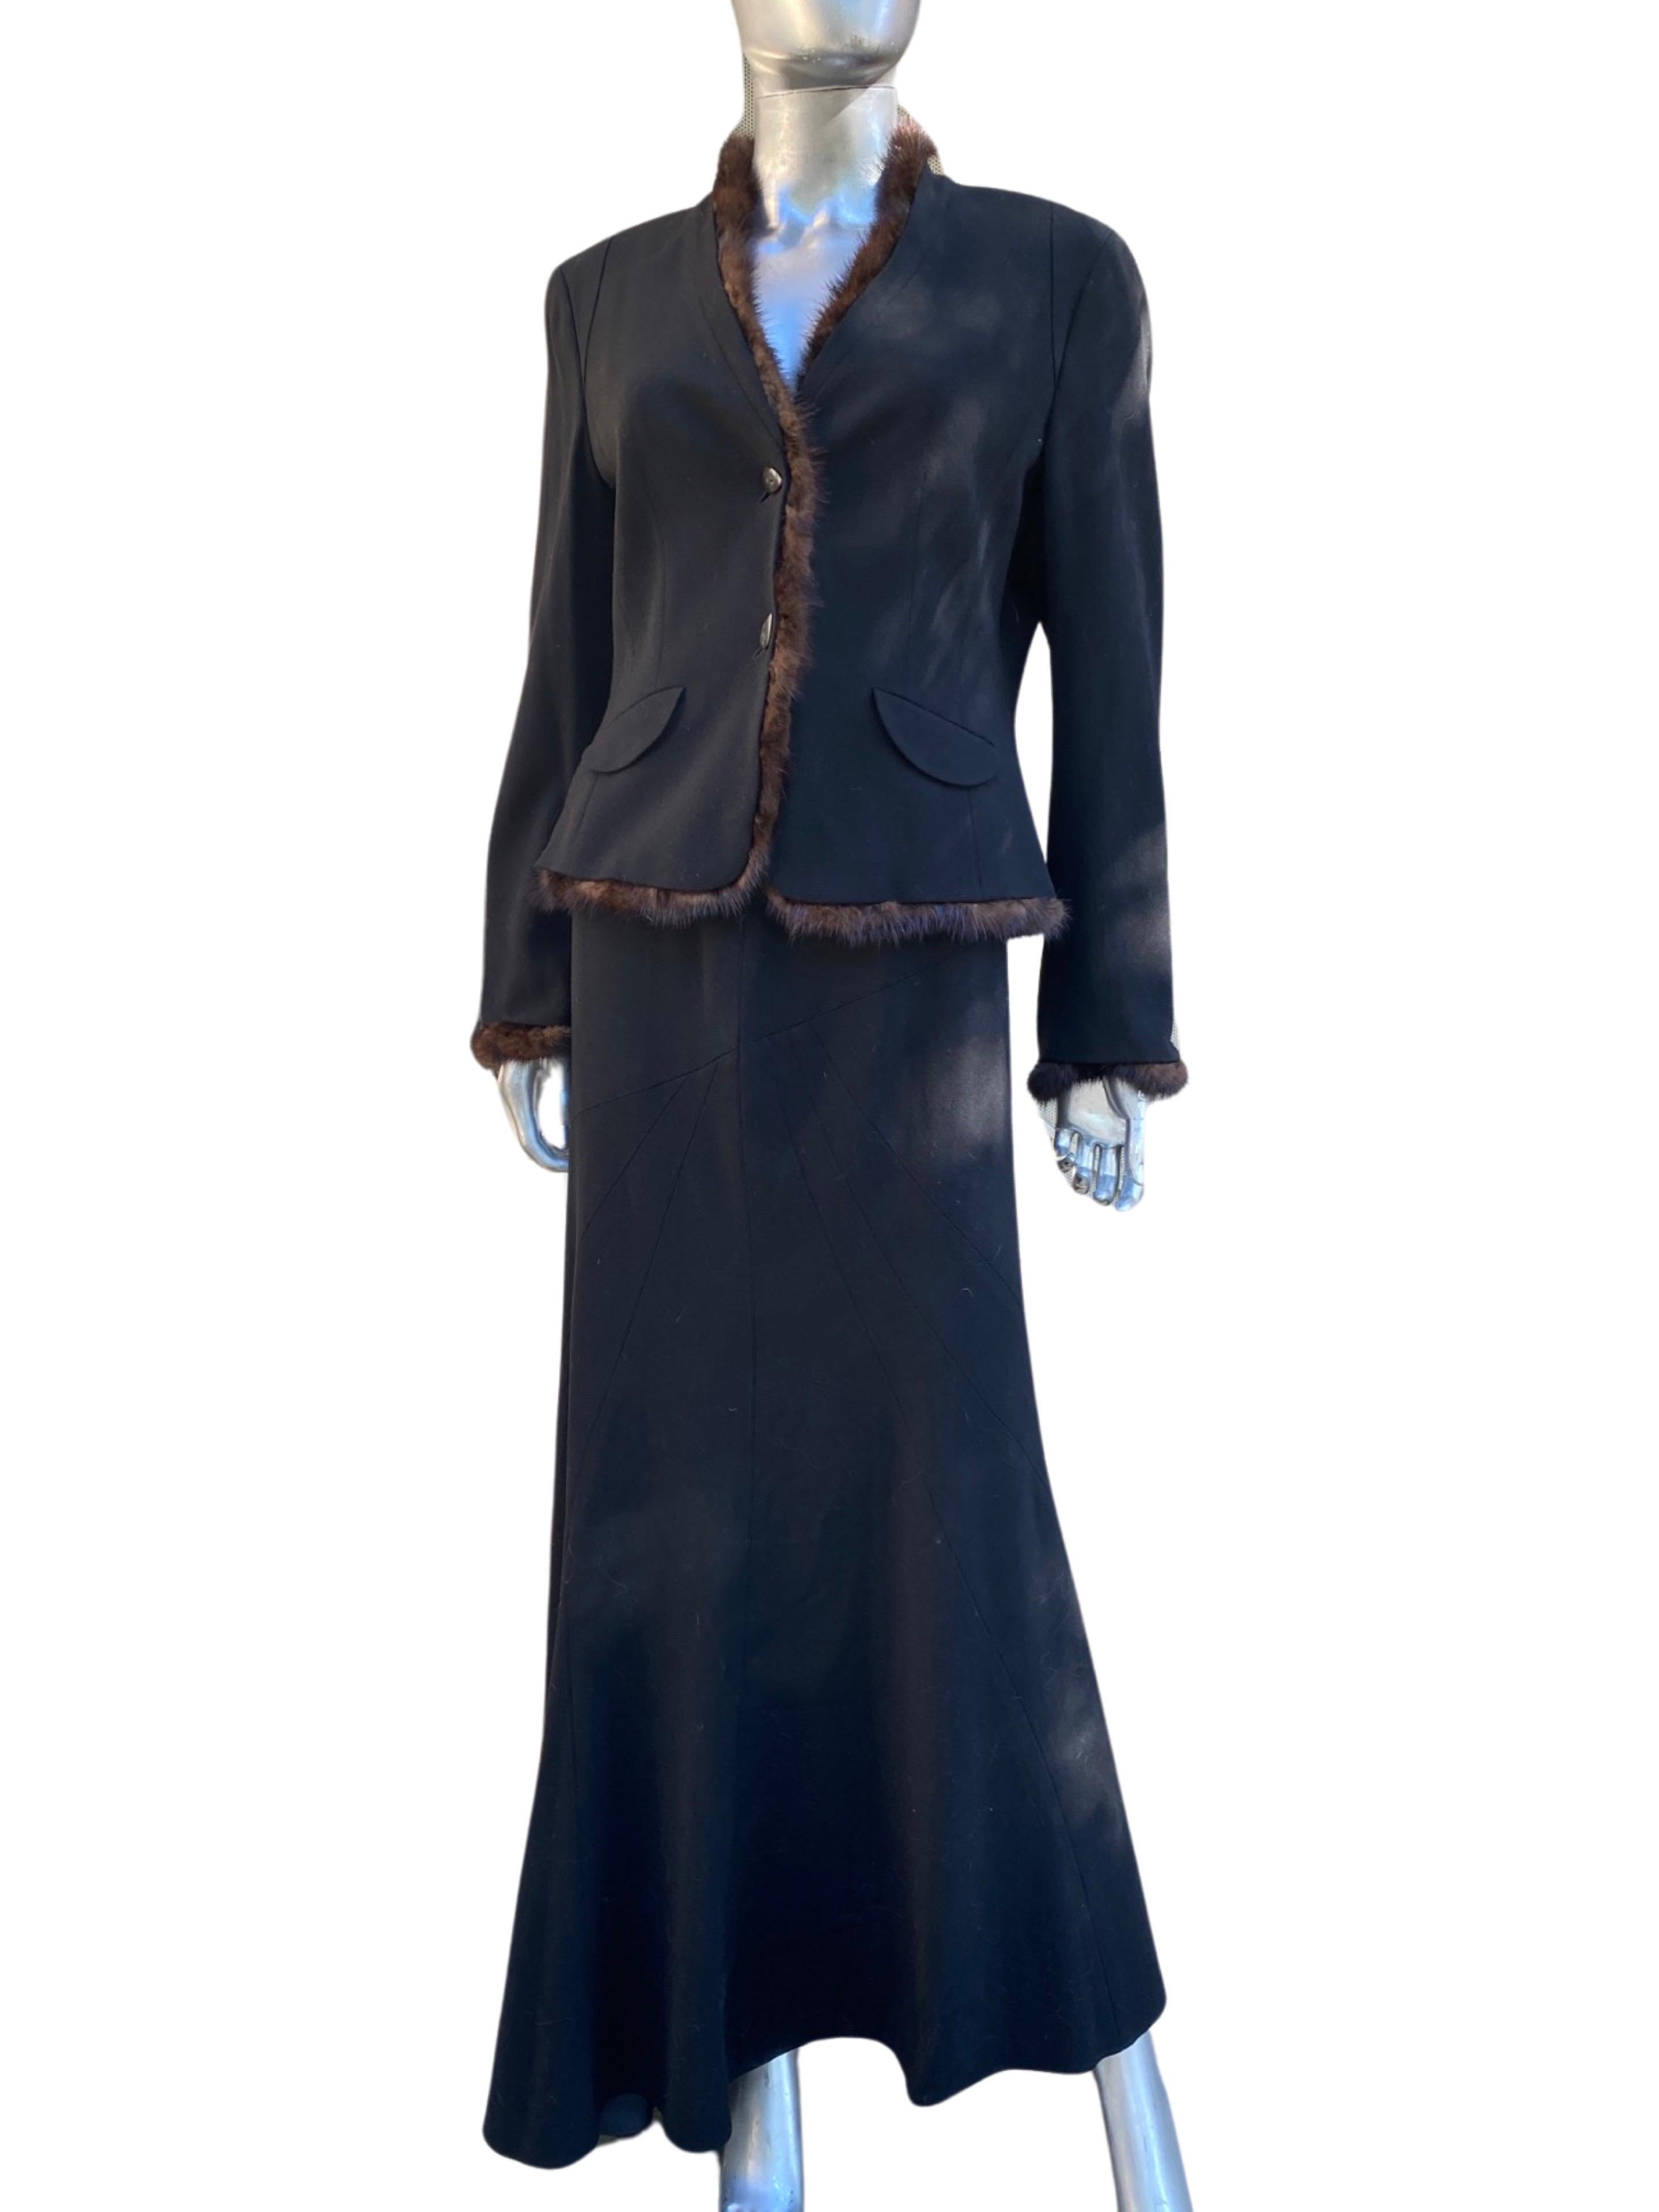 Women's or Men's Worth New York CHIC! Black Wool Crepe Suit w/ Mink Trim Jacket Sz 12/14 For Sale